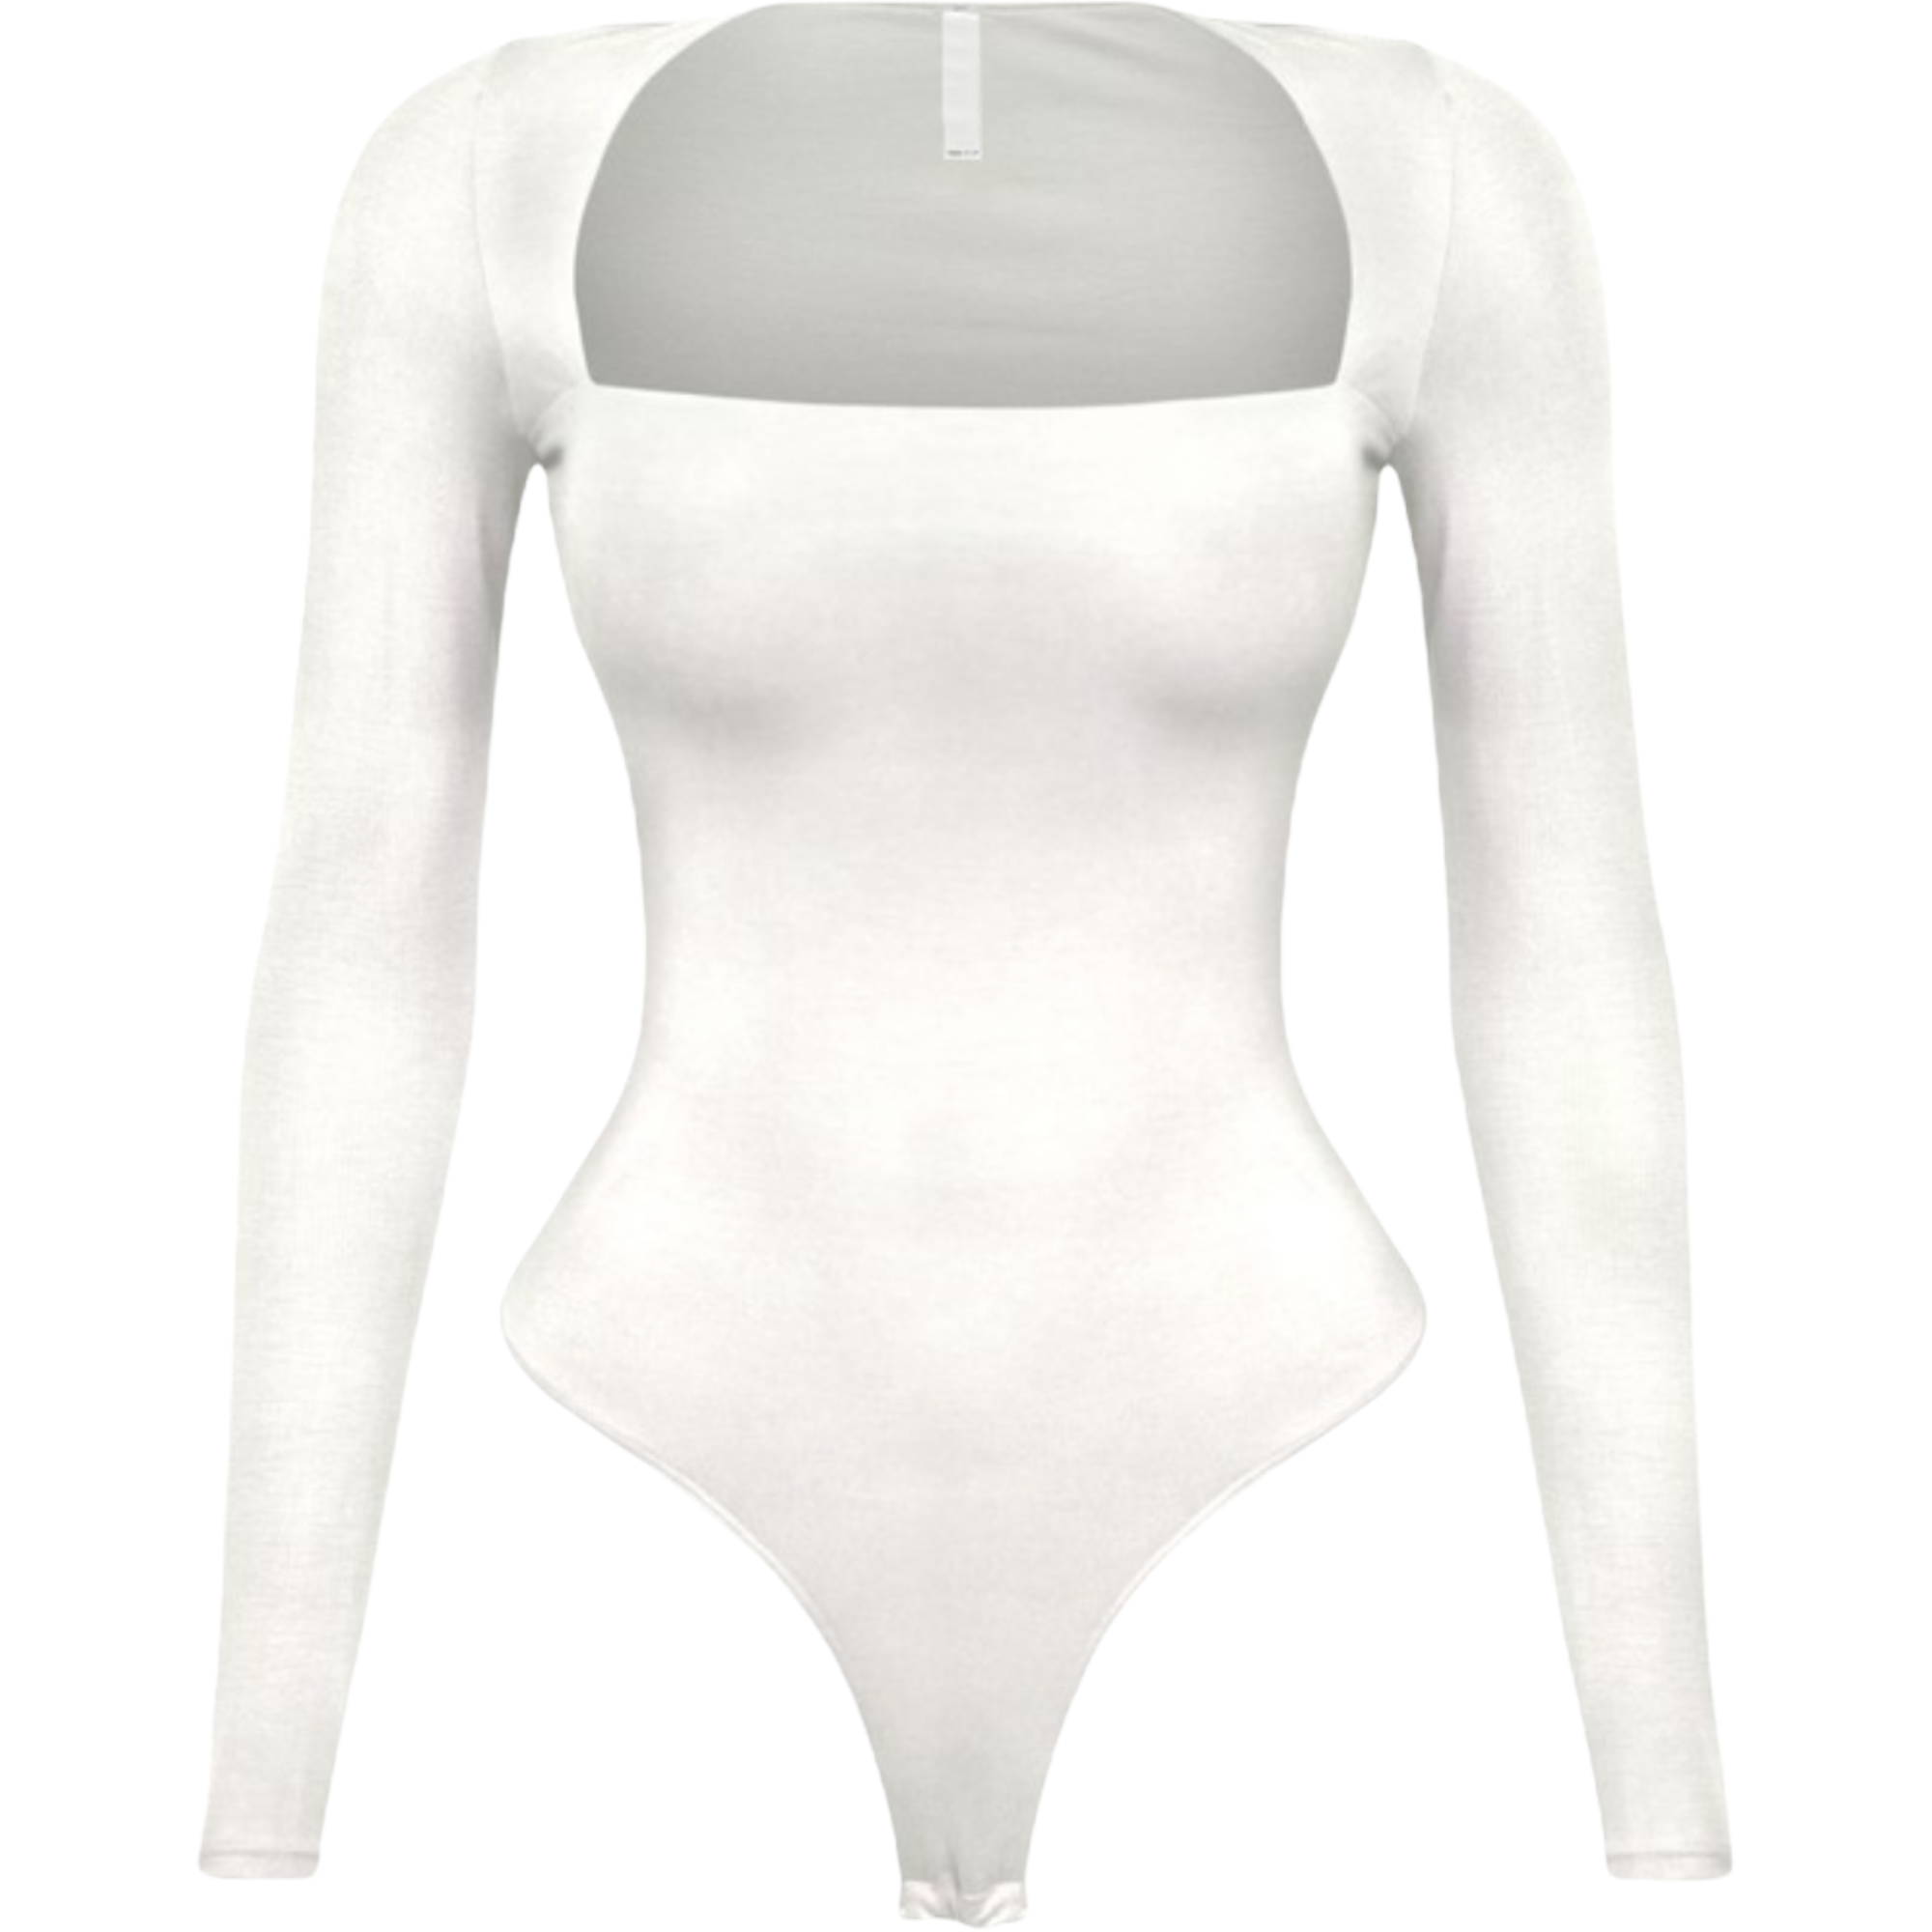 GG White Basic Bodysuit - ggfiona